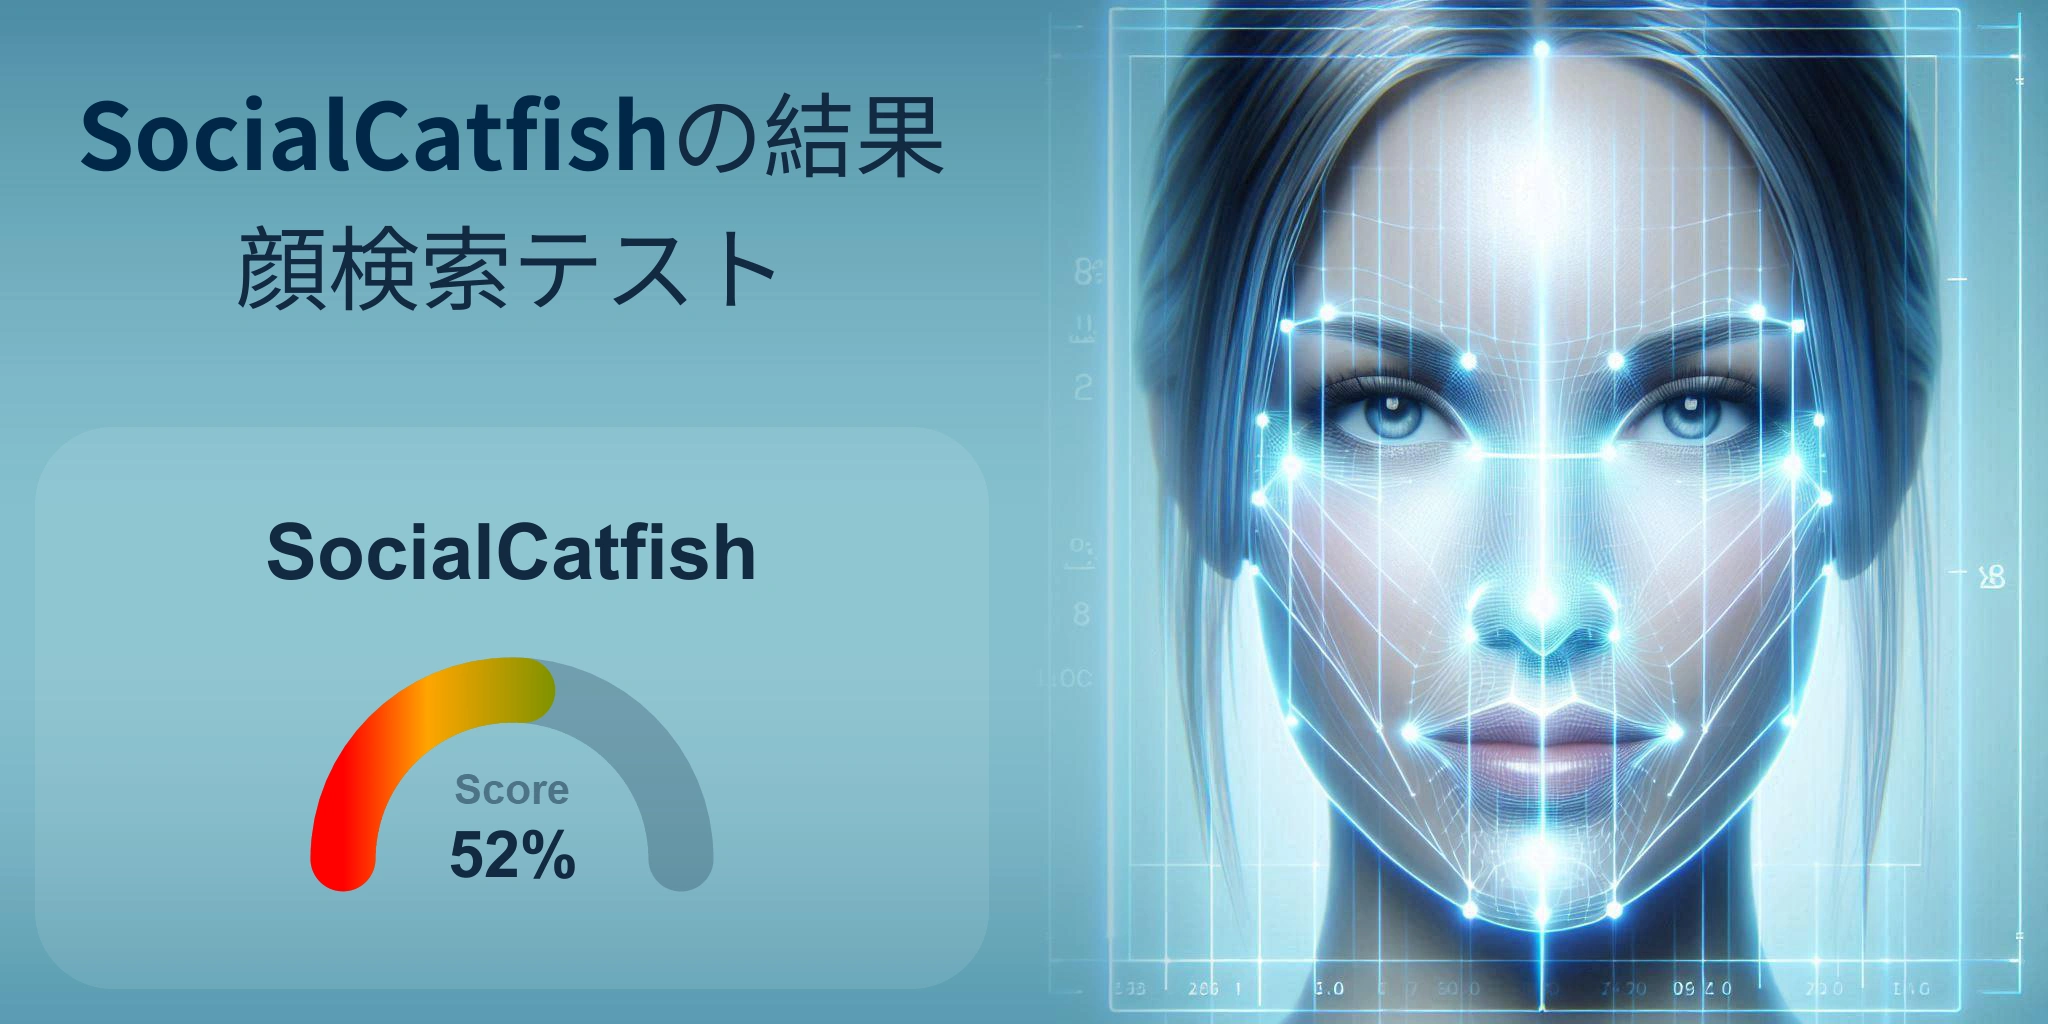 SocialCatfish.com